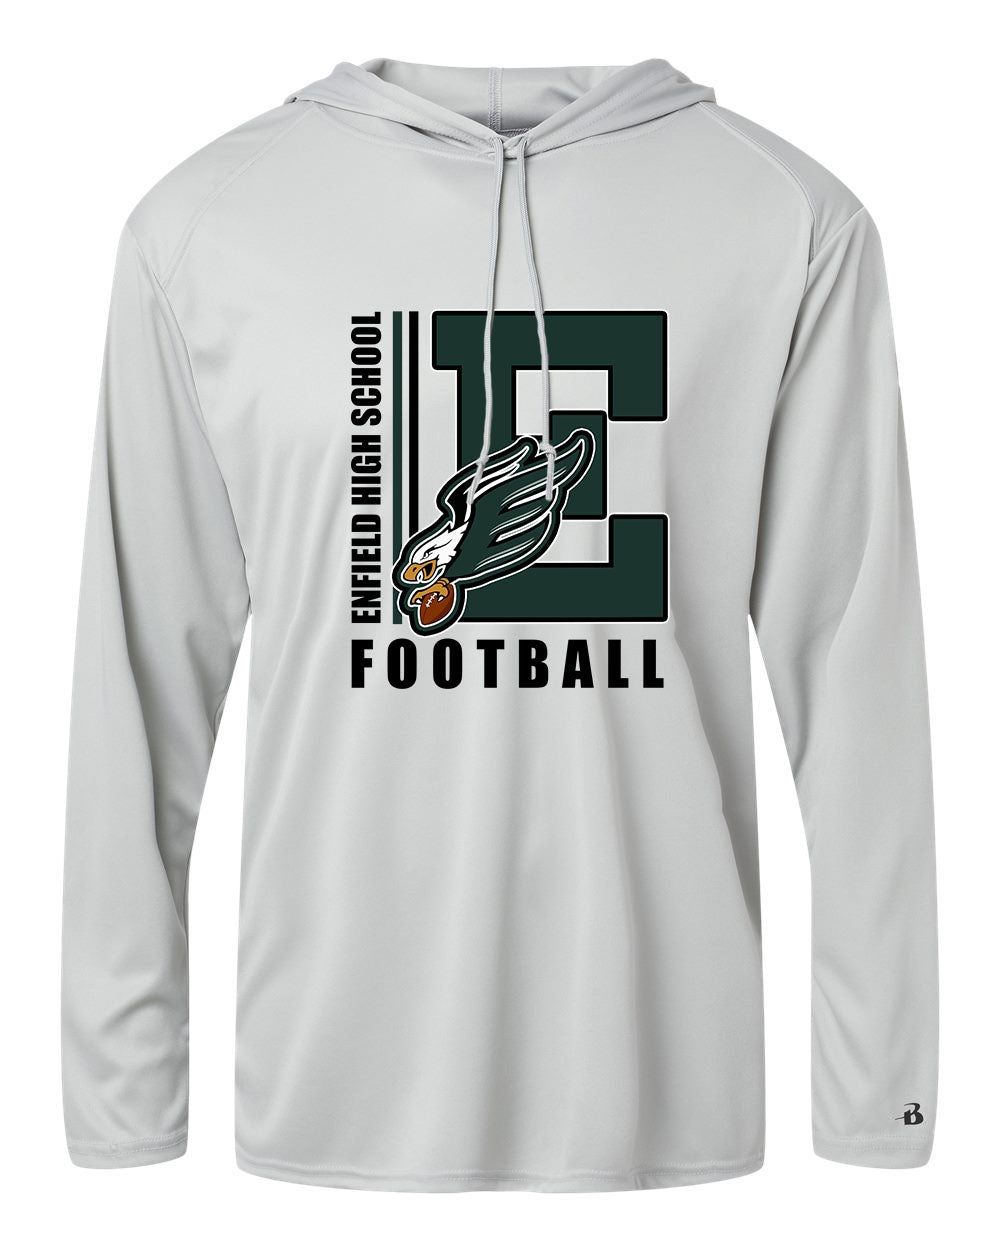 Enfield Eagles Football Adult Hooded Longsleeve T-Shirt "Big E" - 4105 (color options available)